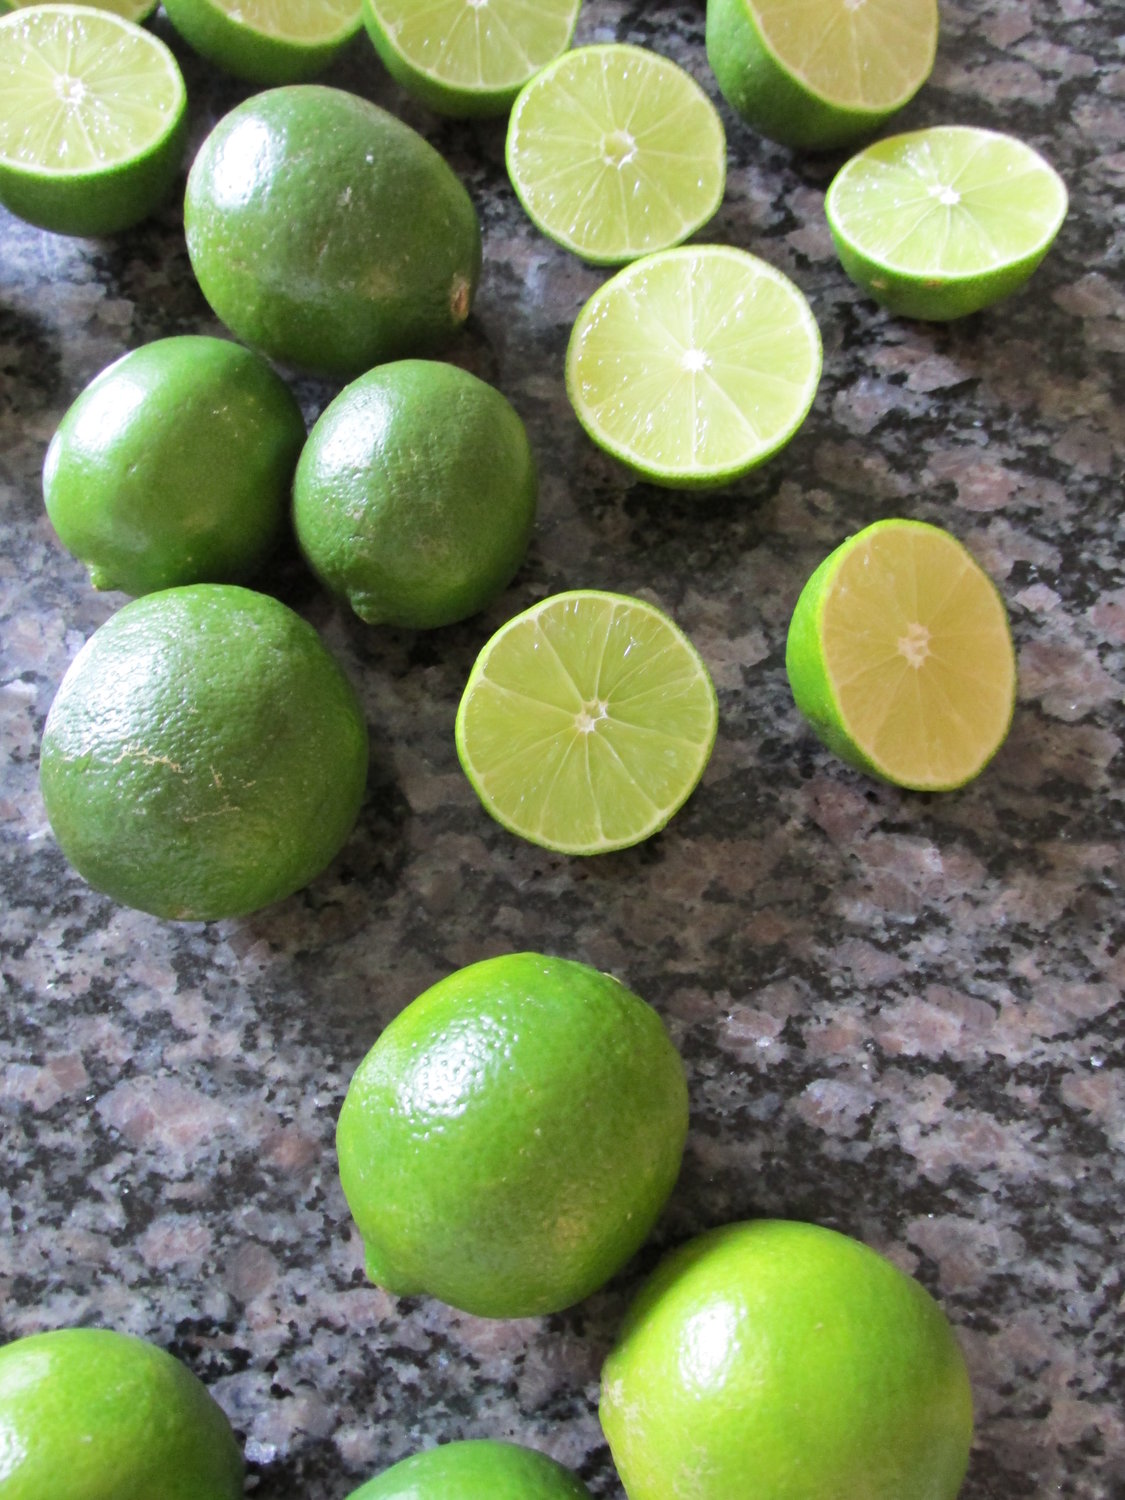 Juicing limes for margaritas.